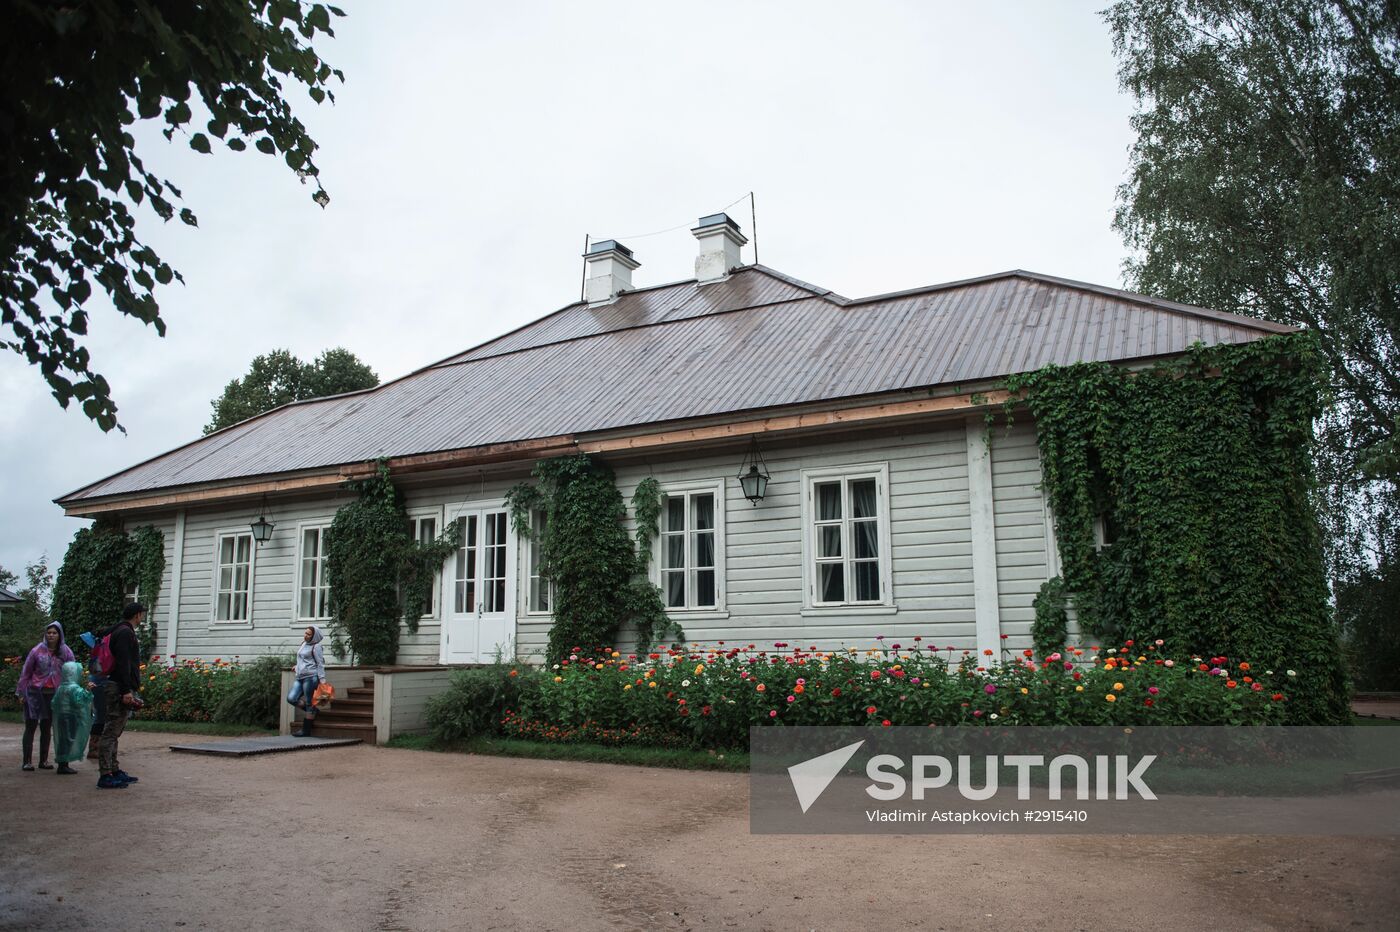 Alexander Pushkin Museum at Mikhailovskoye Estate in Pskov Region